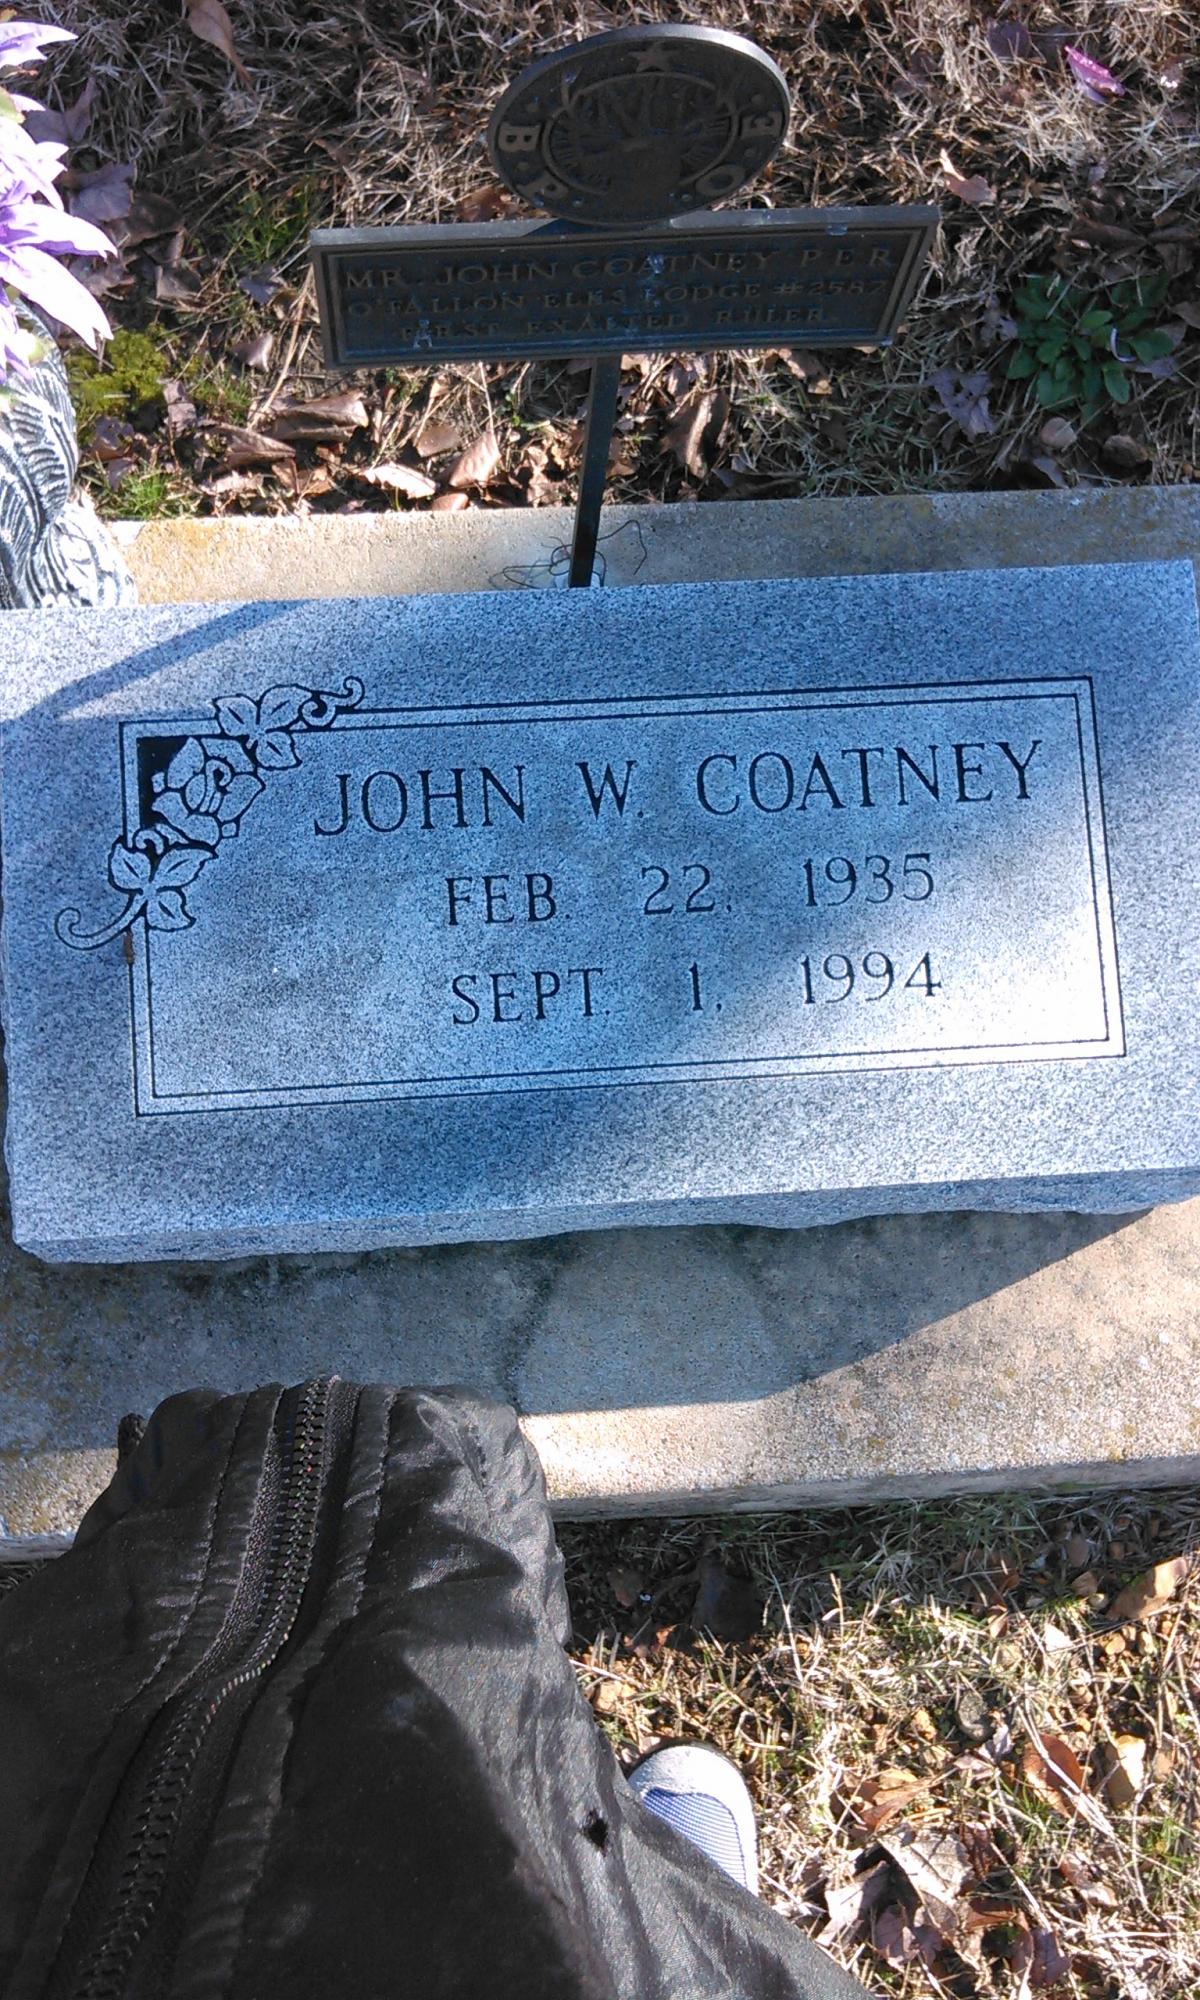 OK, Grove, Buzzard Cemetery, Coatney, John W. Headstone